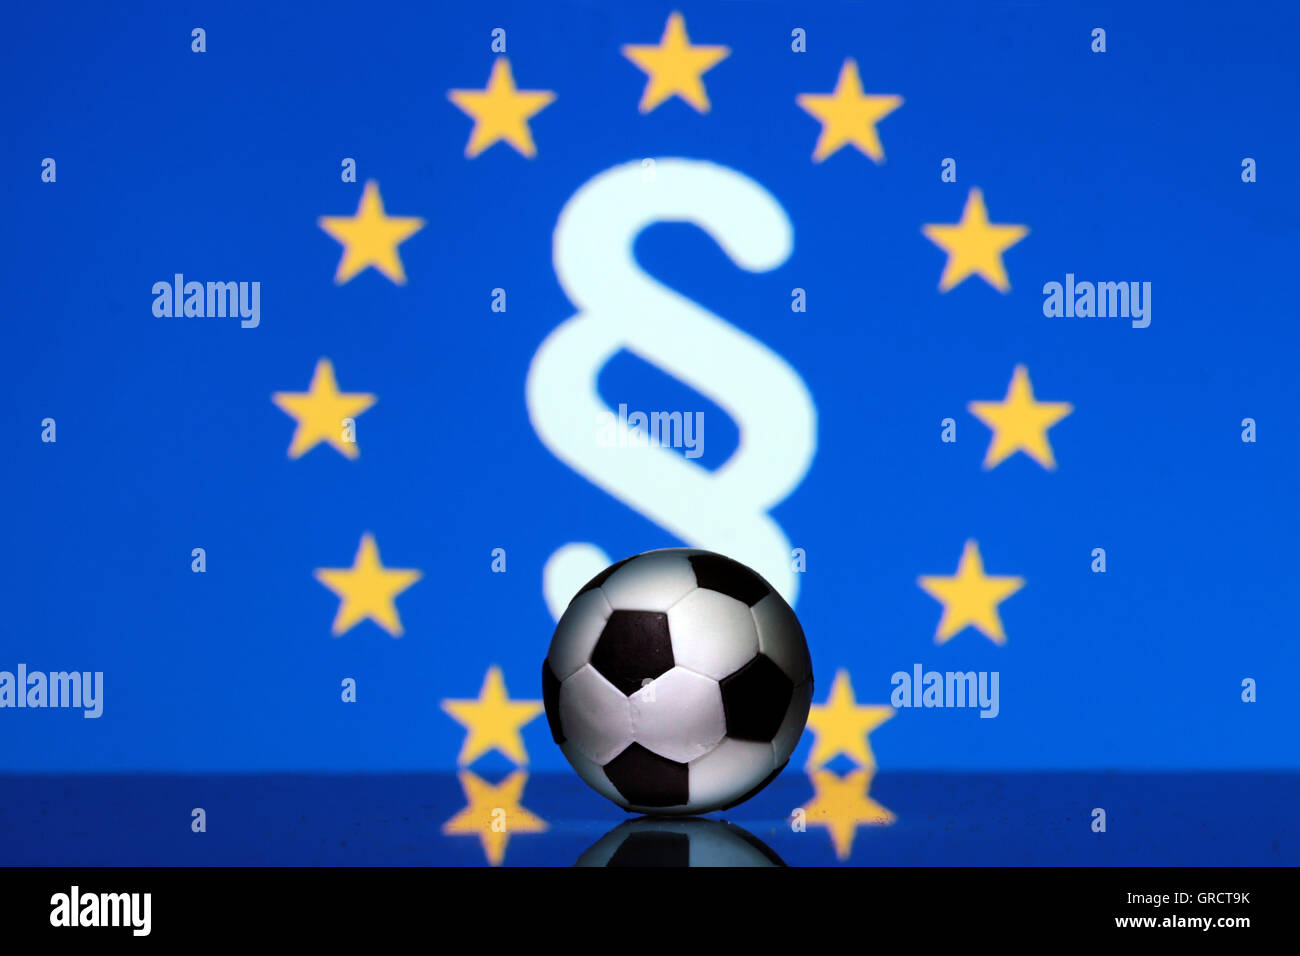 Ballon de soccer avec drapeau de l'UE et de l'alinéa Sign Banque D'Images